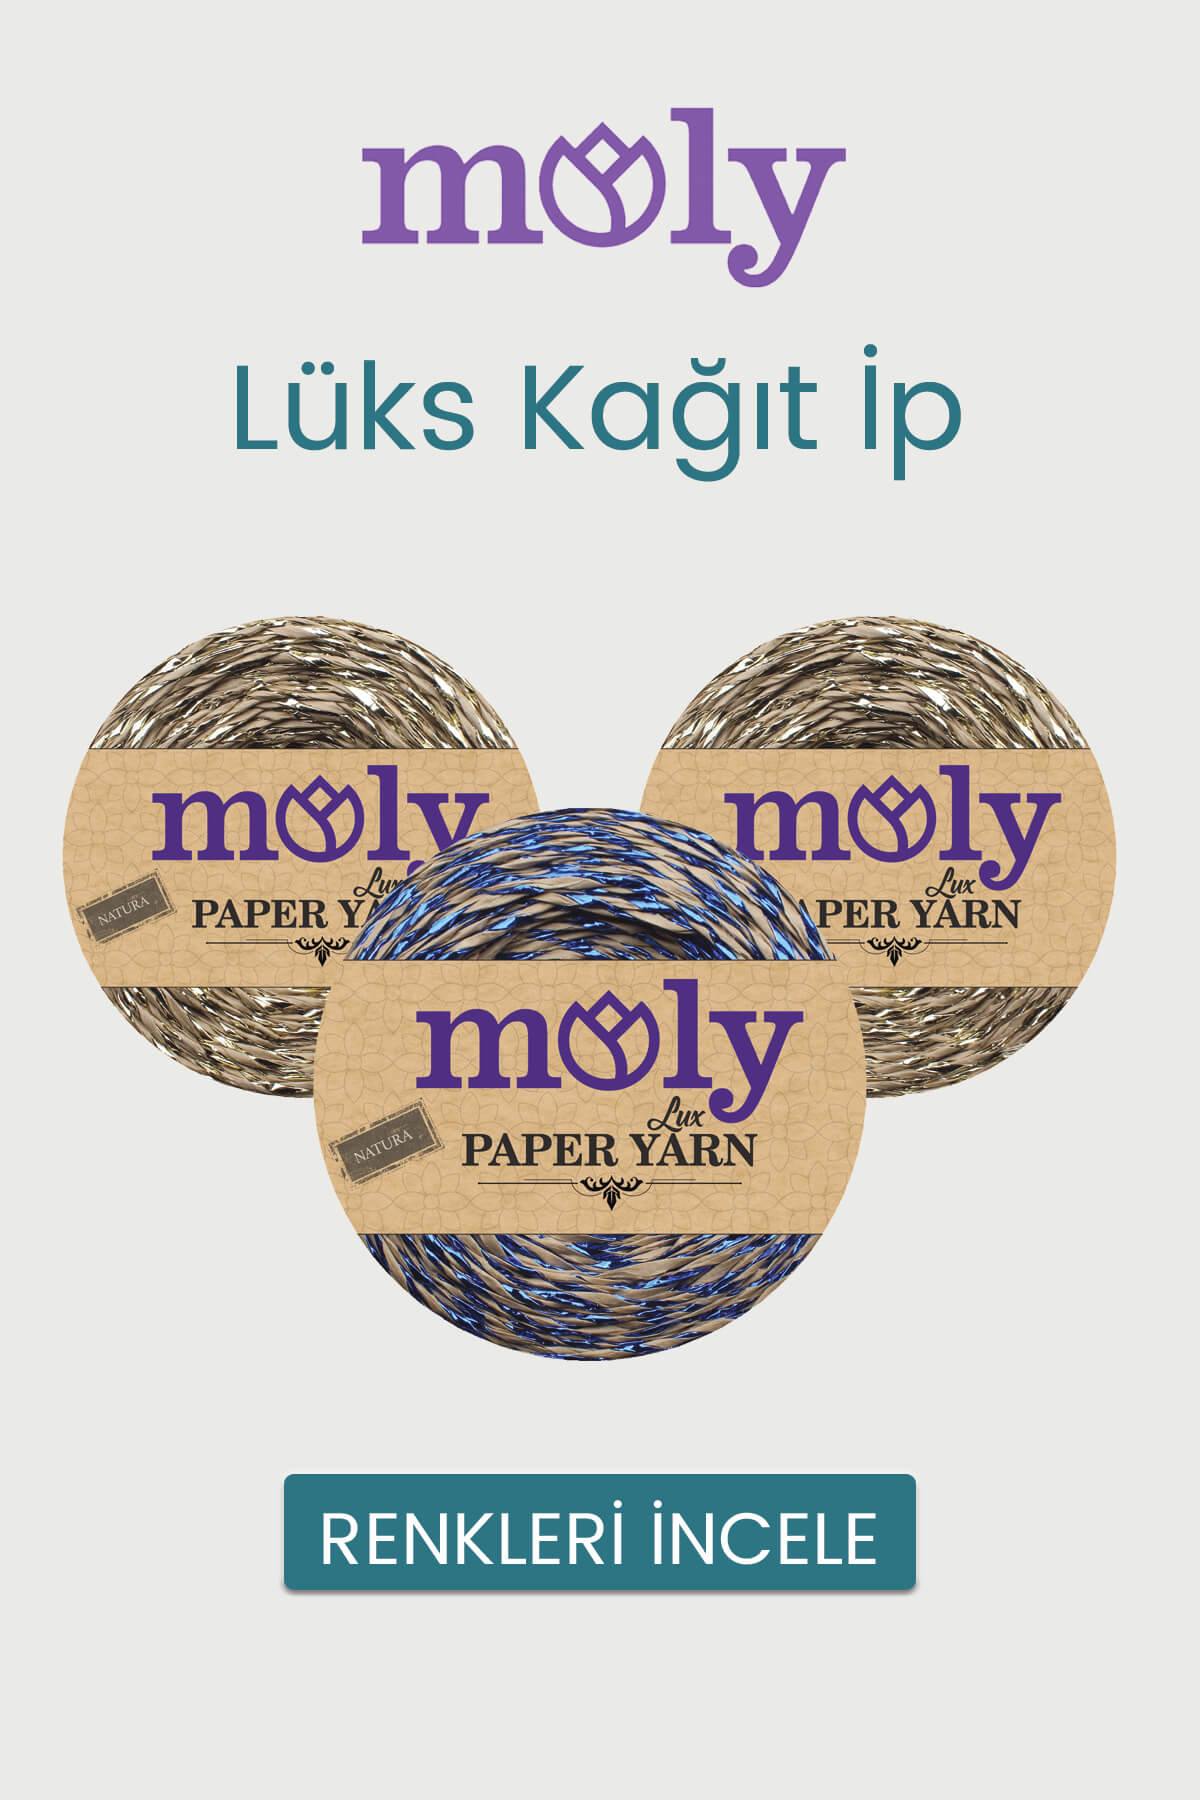 moly-paper-yarn-lux-tekstilland